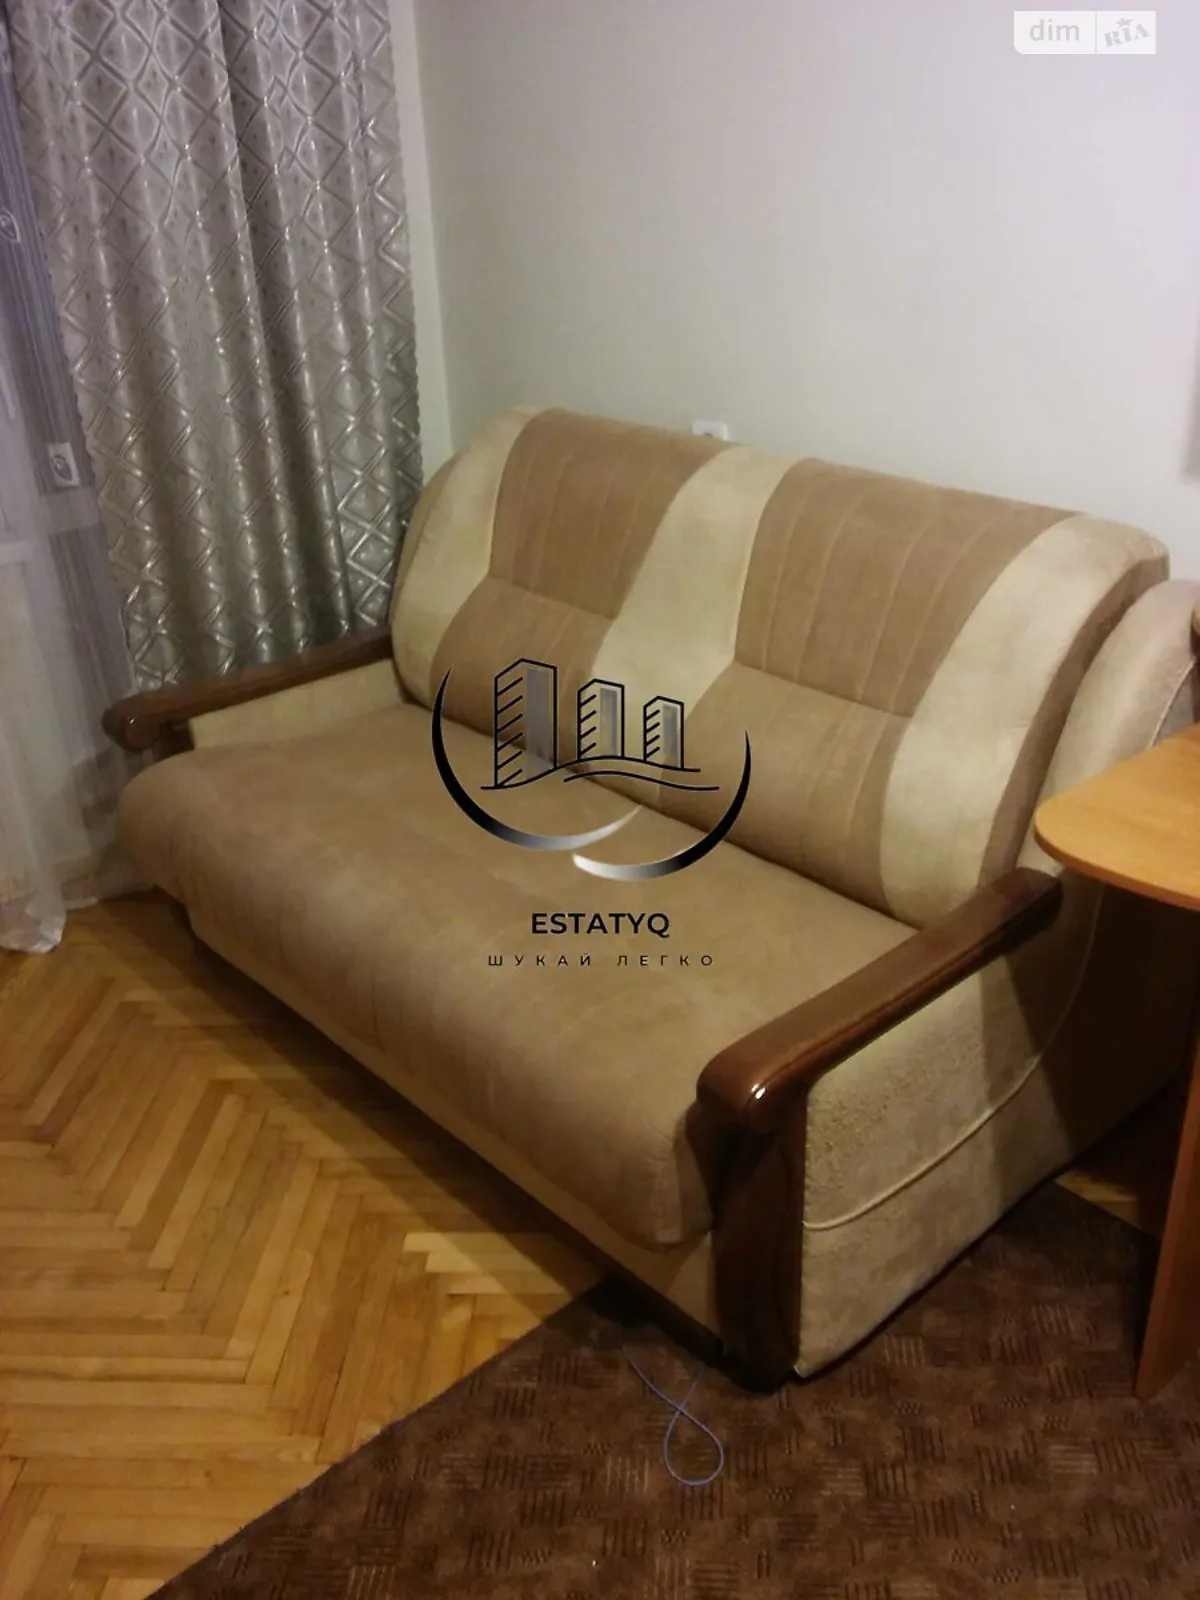 Сдается в аренду 1-комнатная квартира 30 кв. м в Ивано-Франковске - фото 3